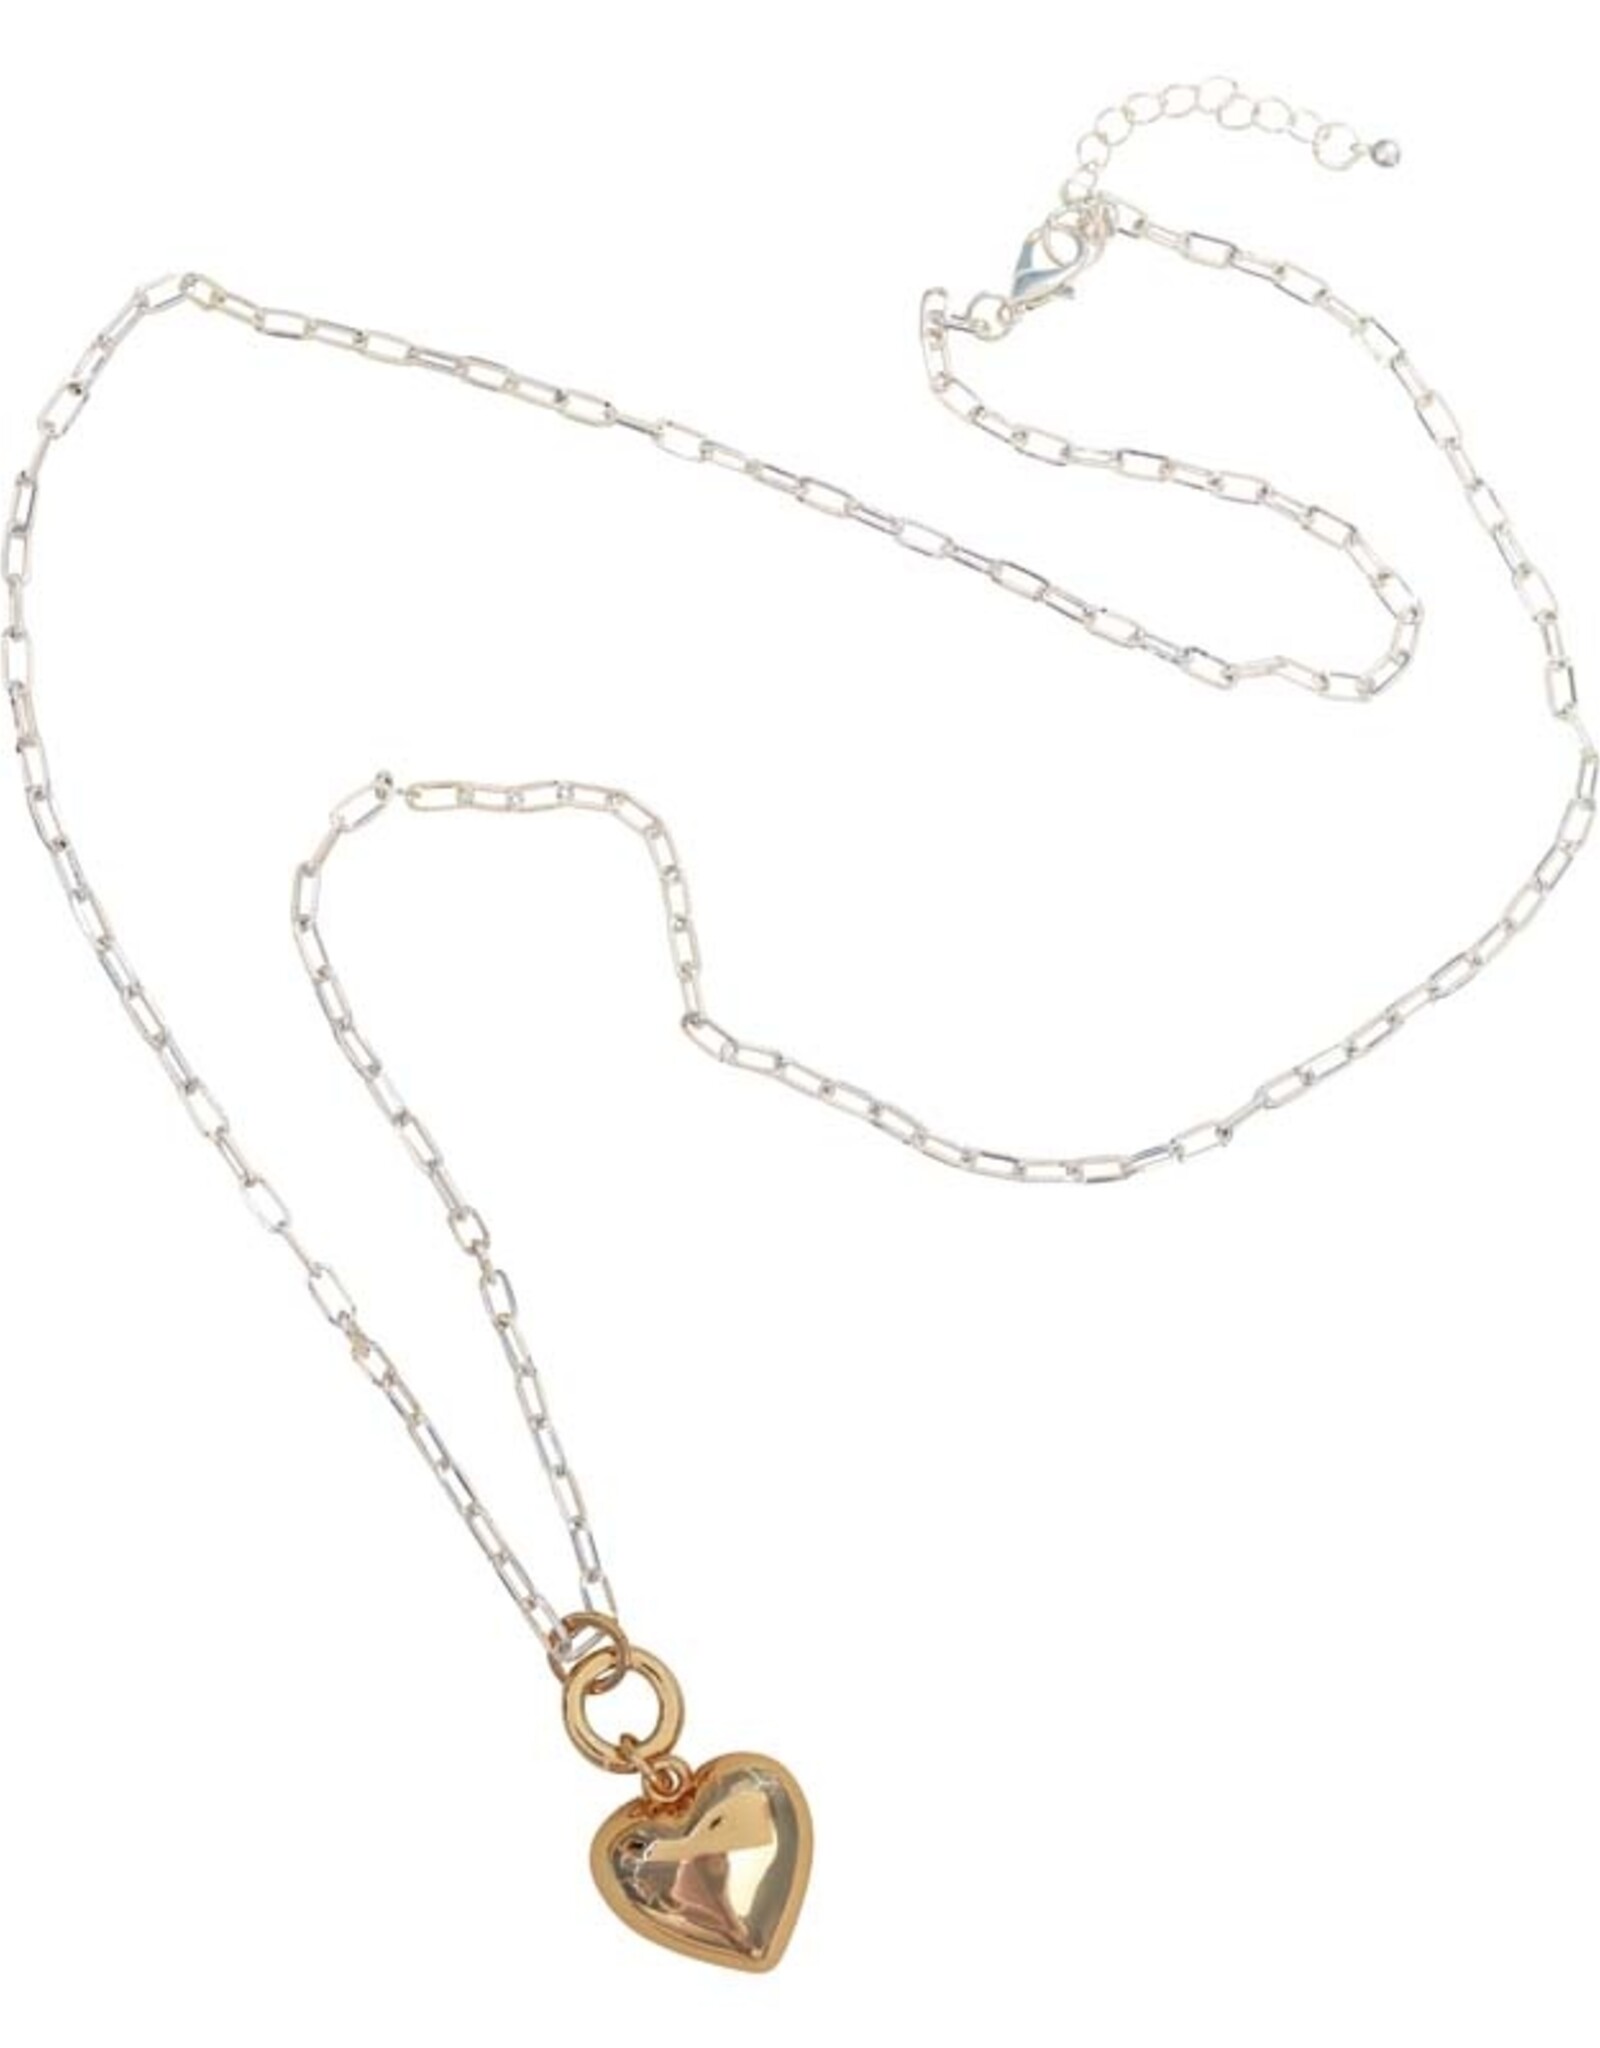 Merx Inc. Fashion Chain Necklace Gold+Silver Chain 90CM+EXT